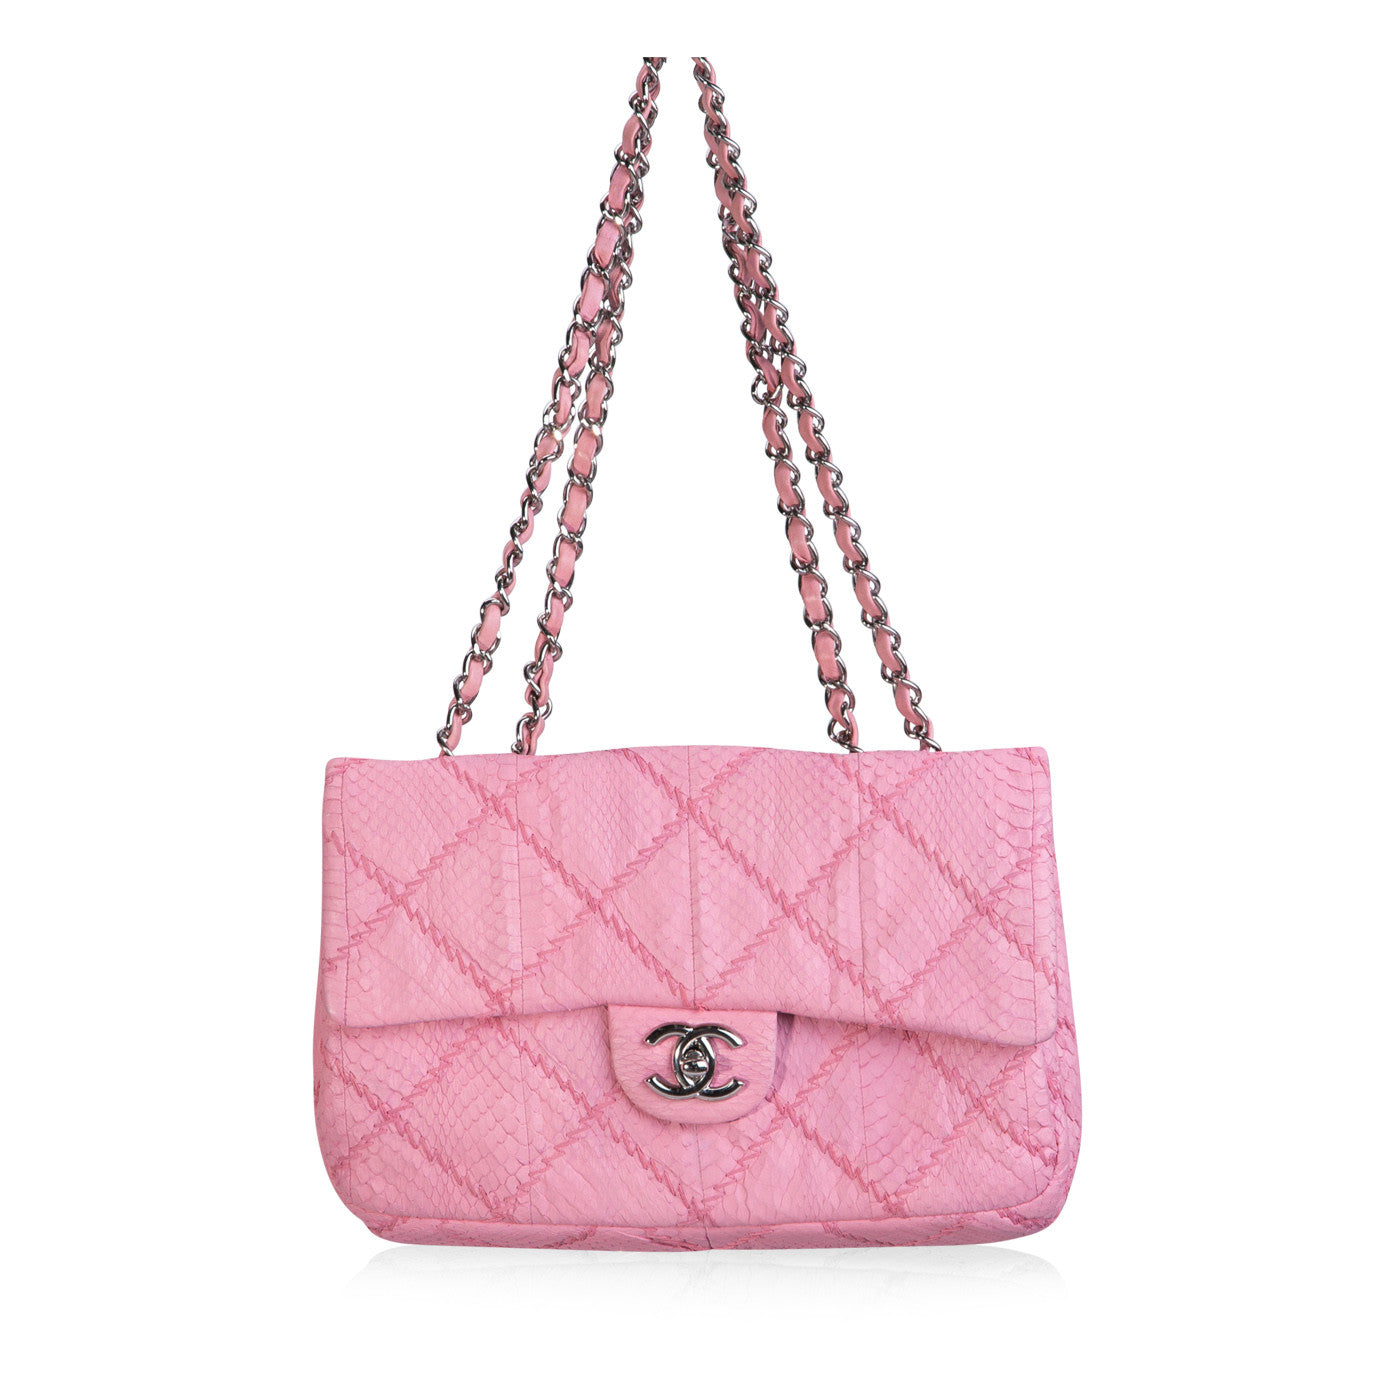 Chanel - Classic Python Flap Bag